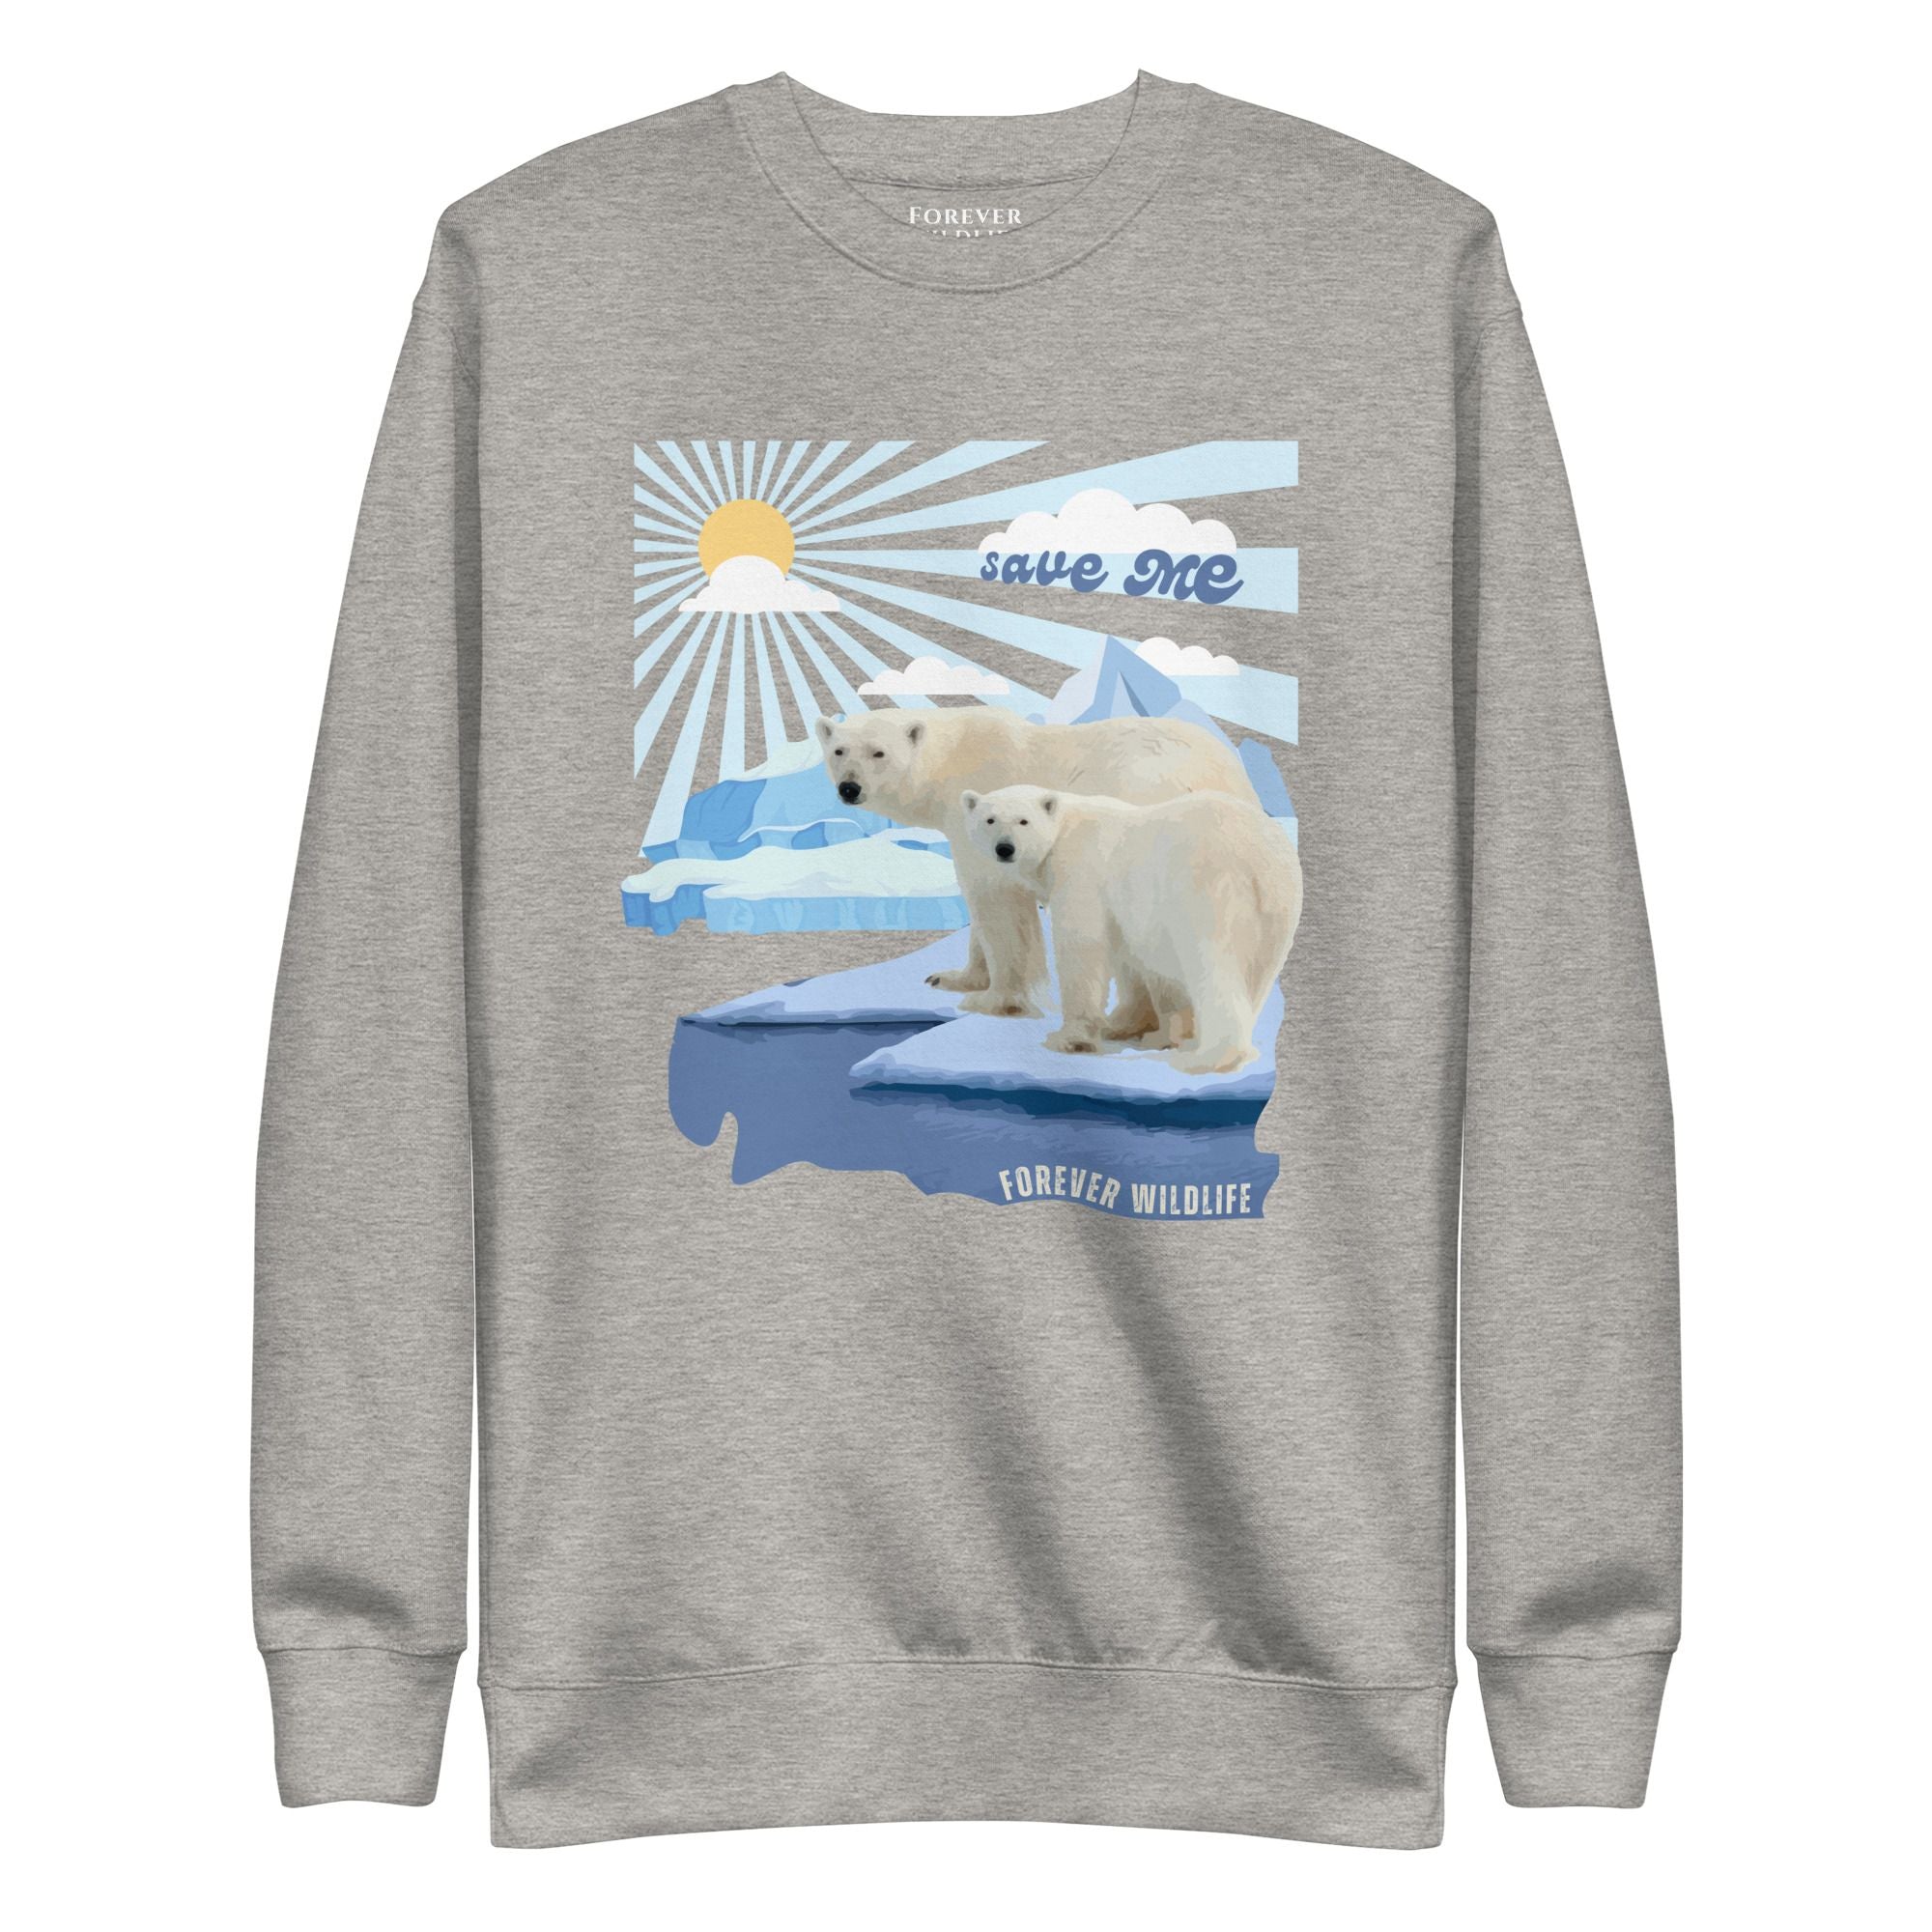 Polar Bears Sweatshirt in Carbon Grey-Premium Wildlife Animal Inspiration Sweatshirt Design with 'Save Me' text, part of Wildlife Sweatshirts & Clothing from Forever Wildlife.